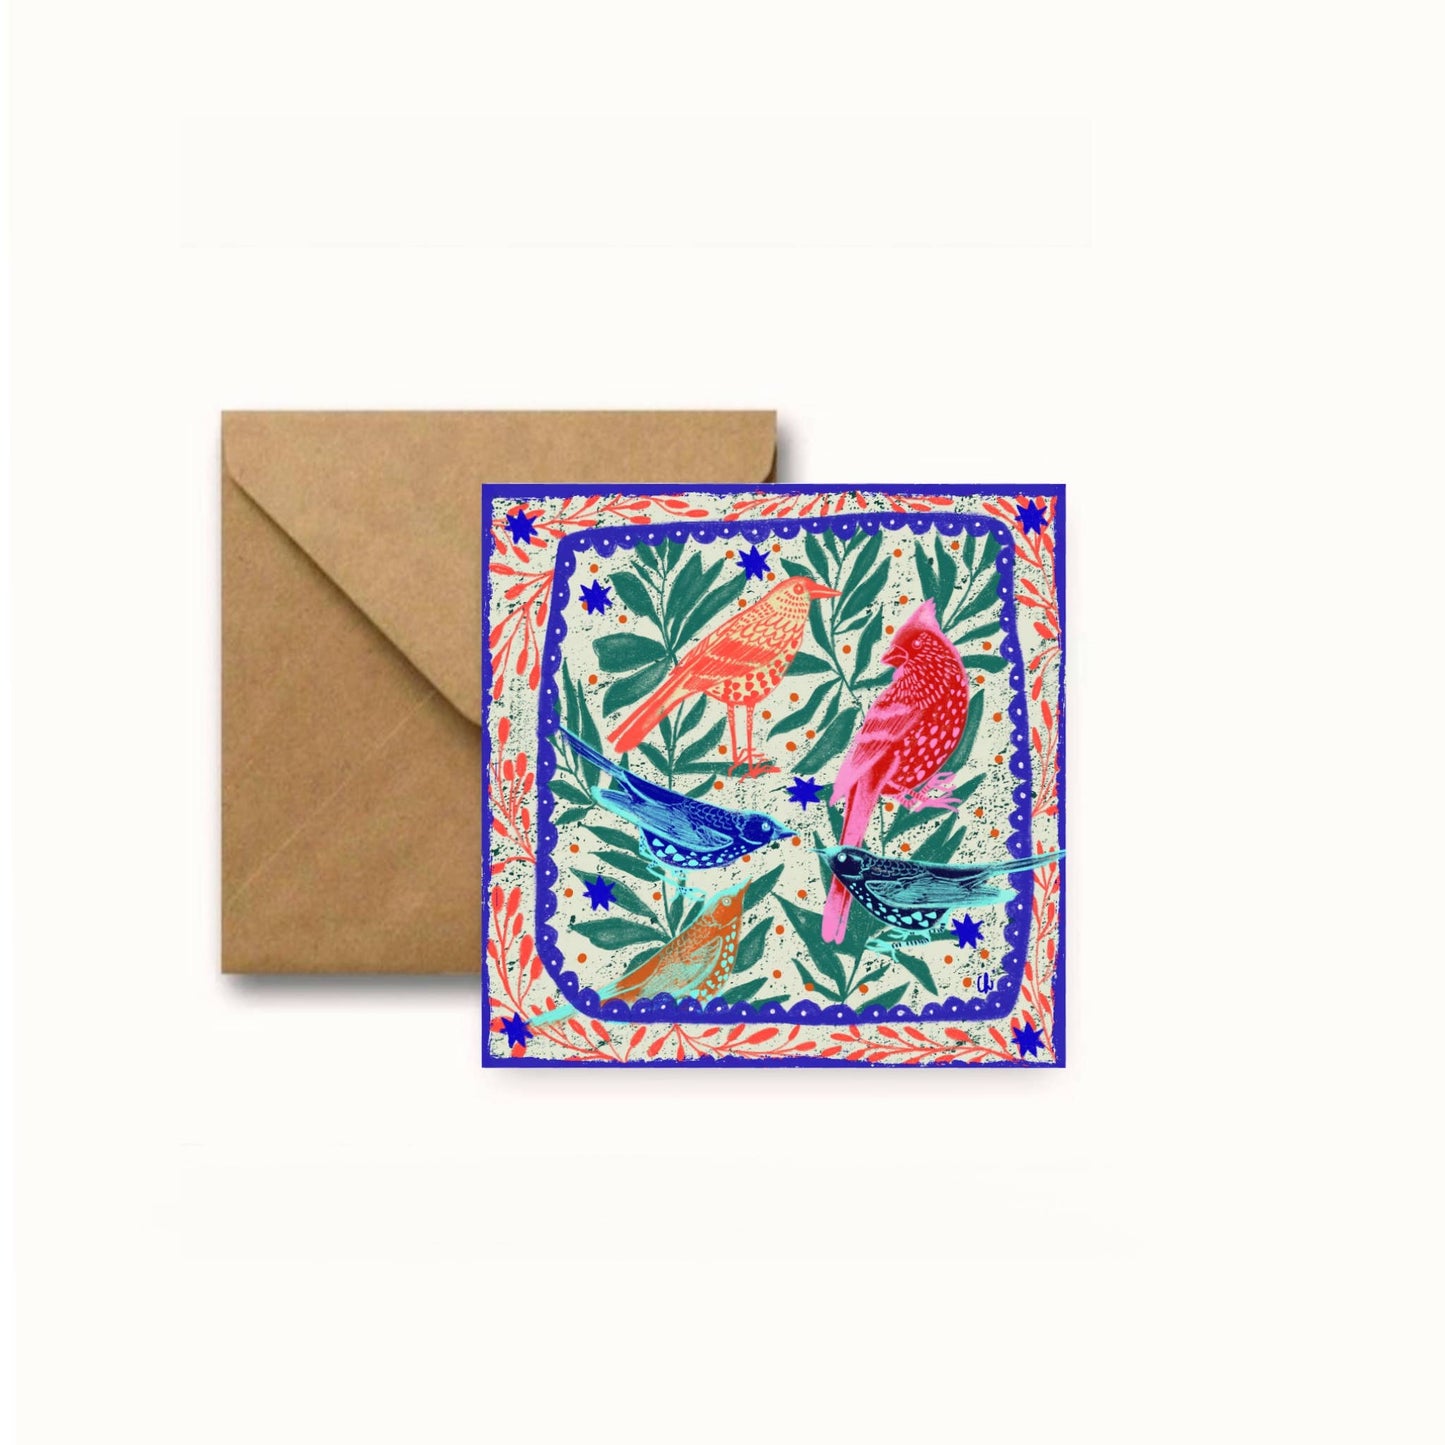 Five birds square greeting card 14x14 cm.